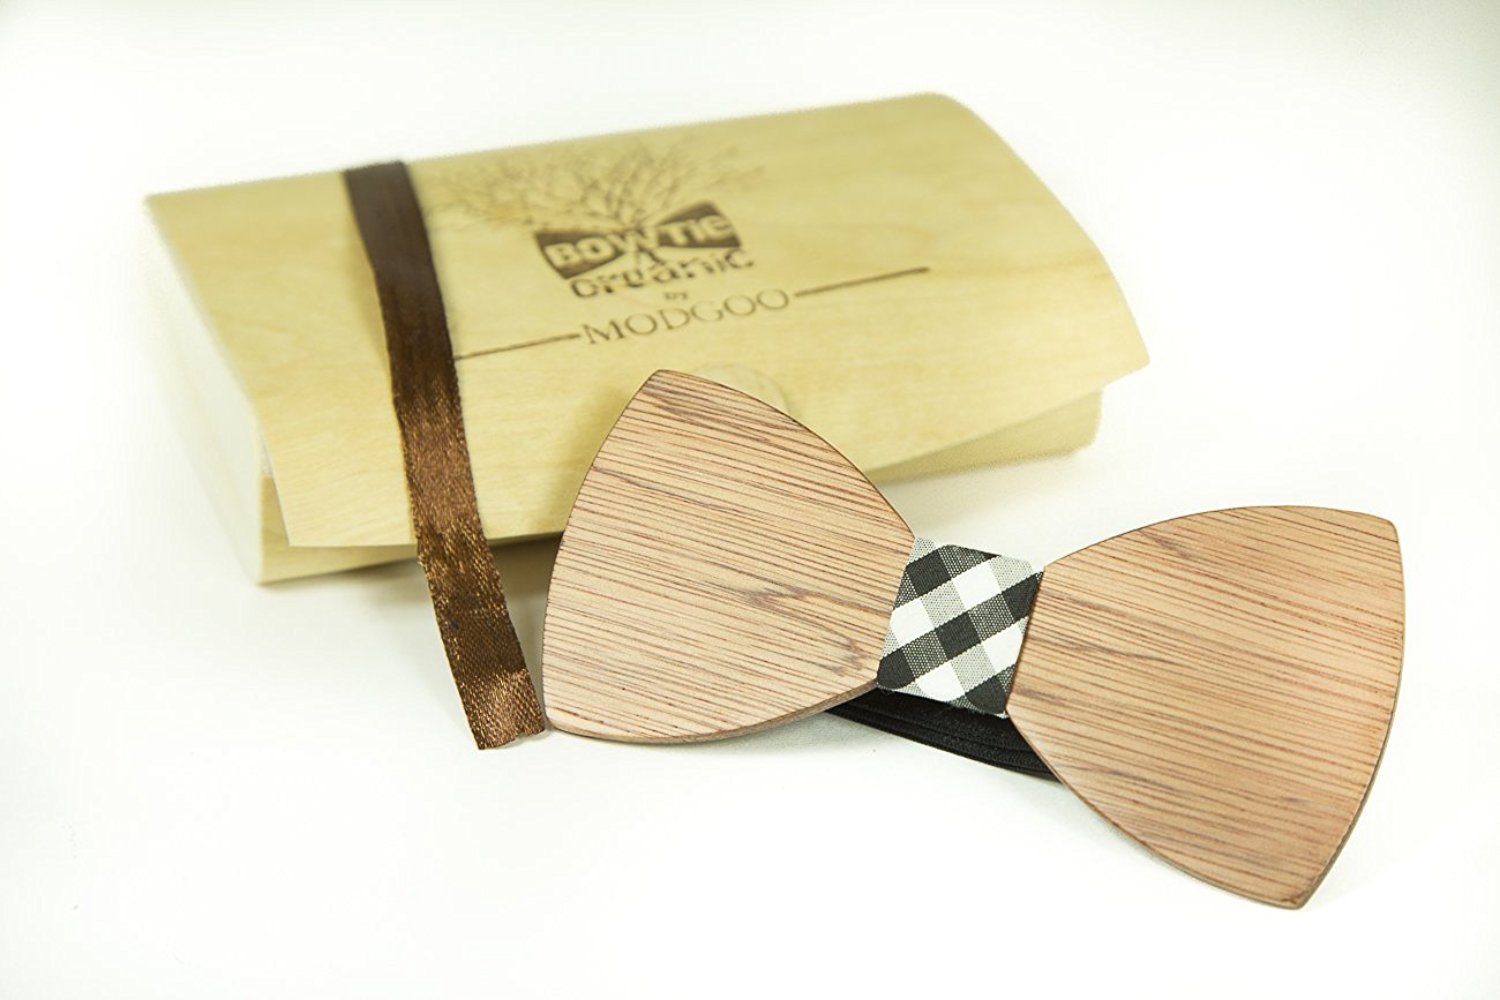 Modgoo Organic Wood Bow Tie Ryan Burberry pattern black and White